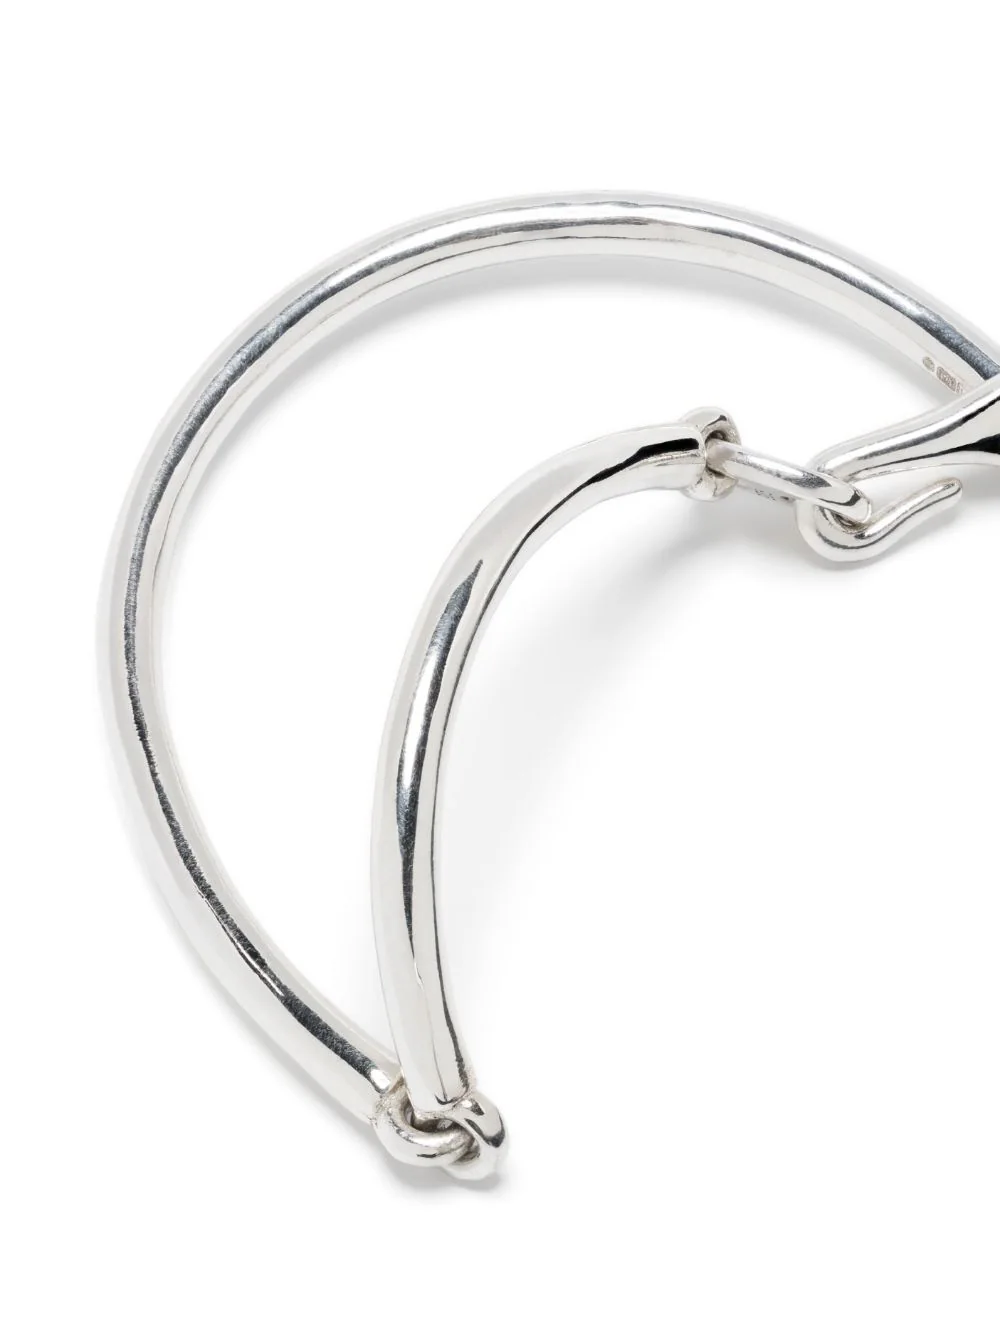 Silver nail bracelet by Blue Bayer Design | Blue Bayer Design NYC